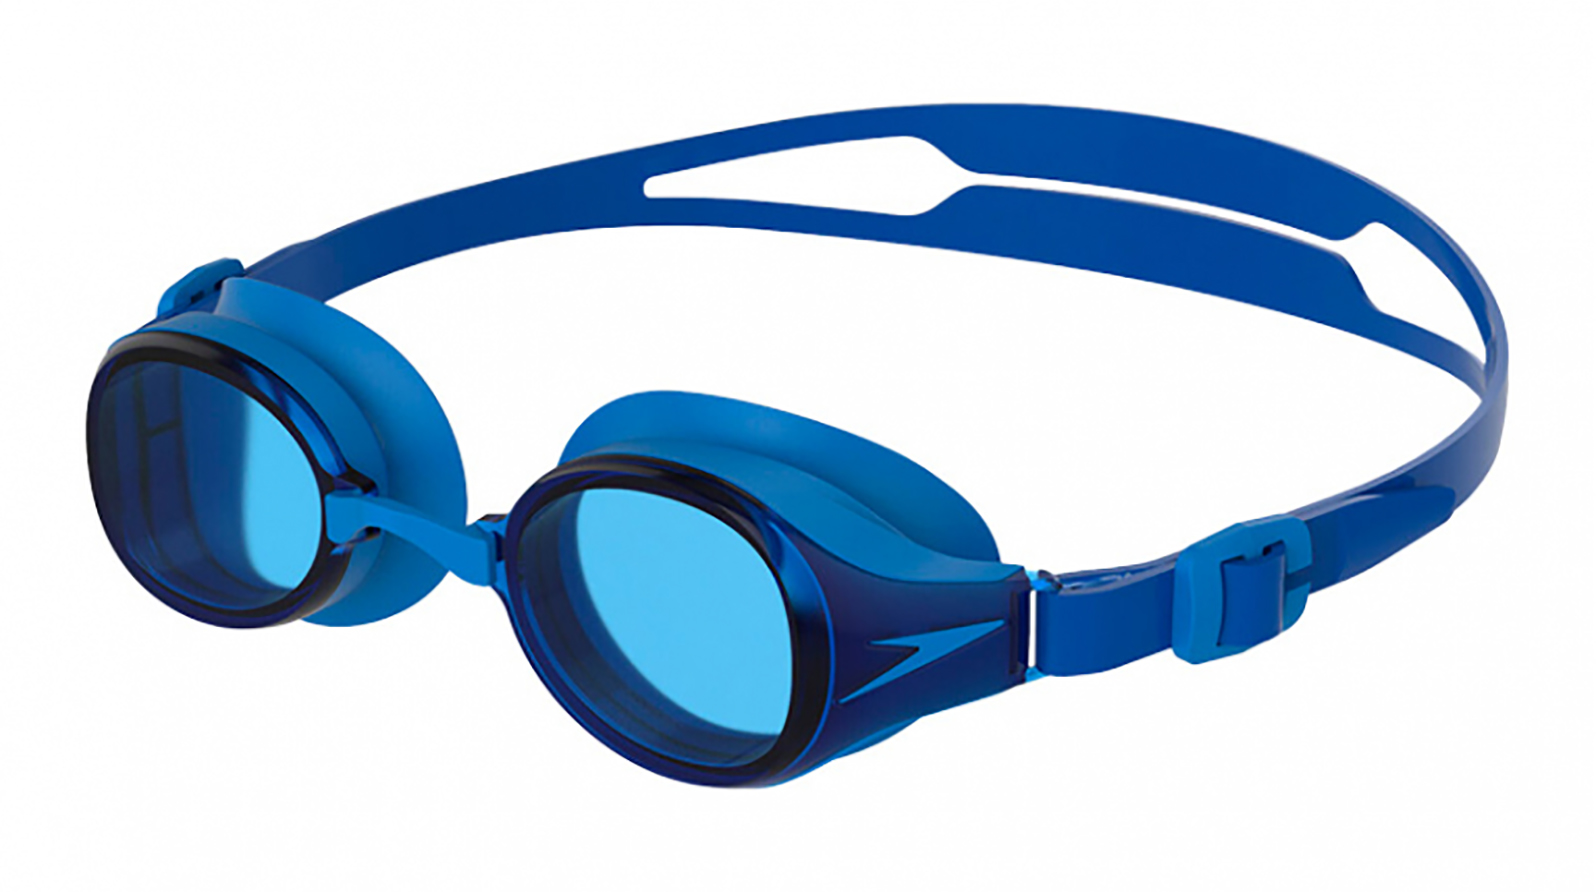 Speedo Очки для плавания Hydropure Optical F809 -2,0 speedo очки для плавания hydropure optical f809 4 0